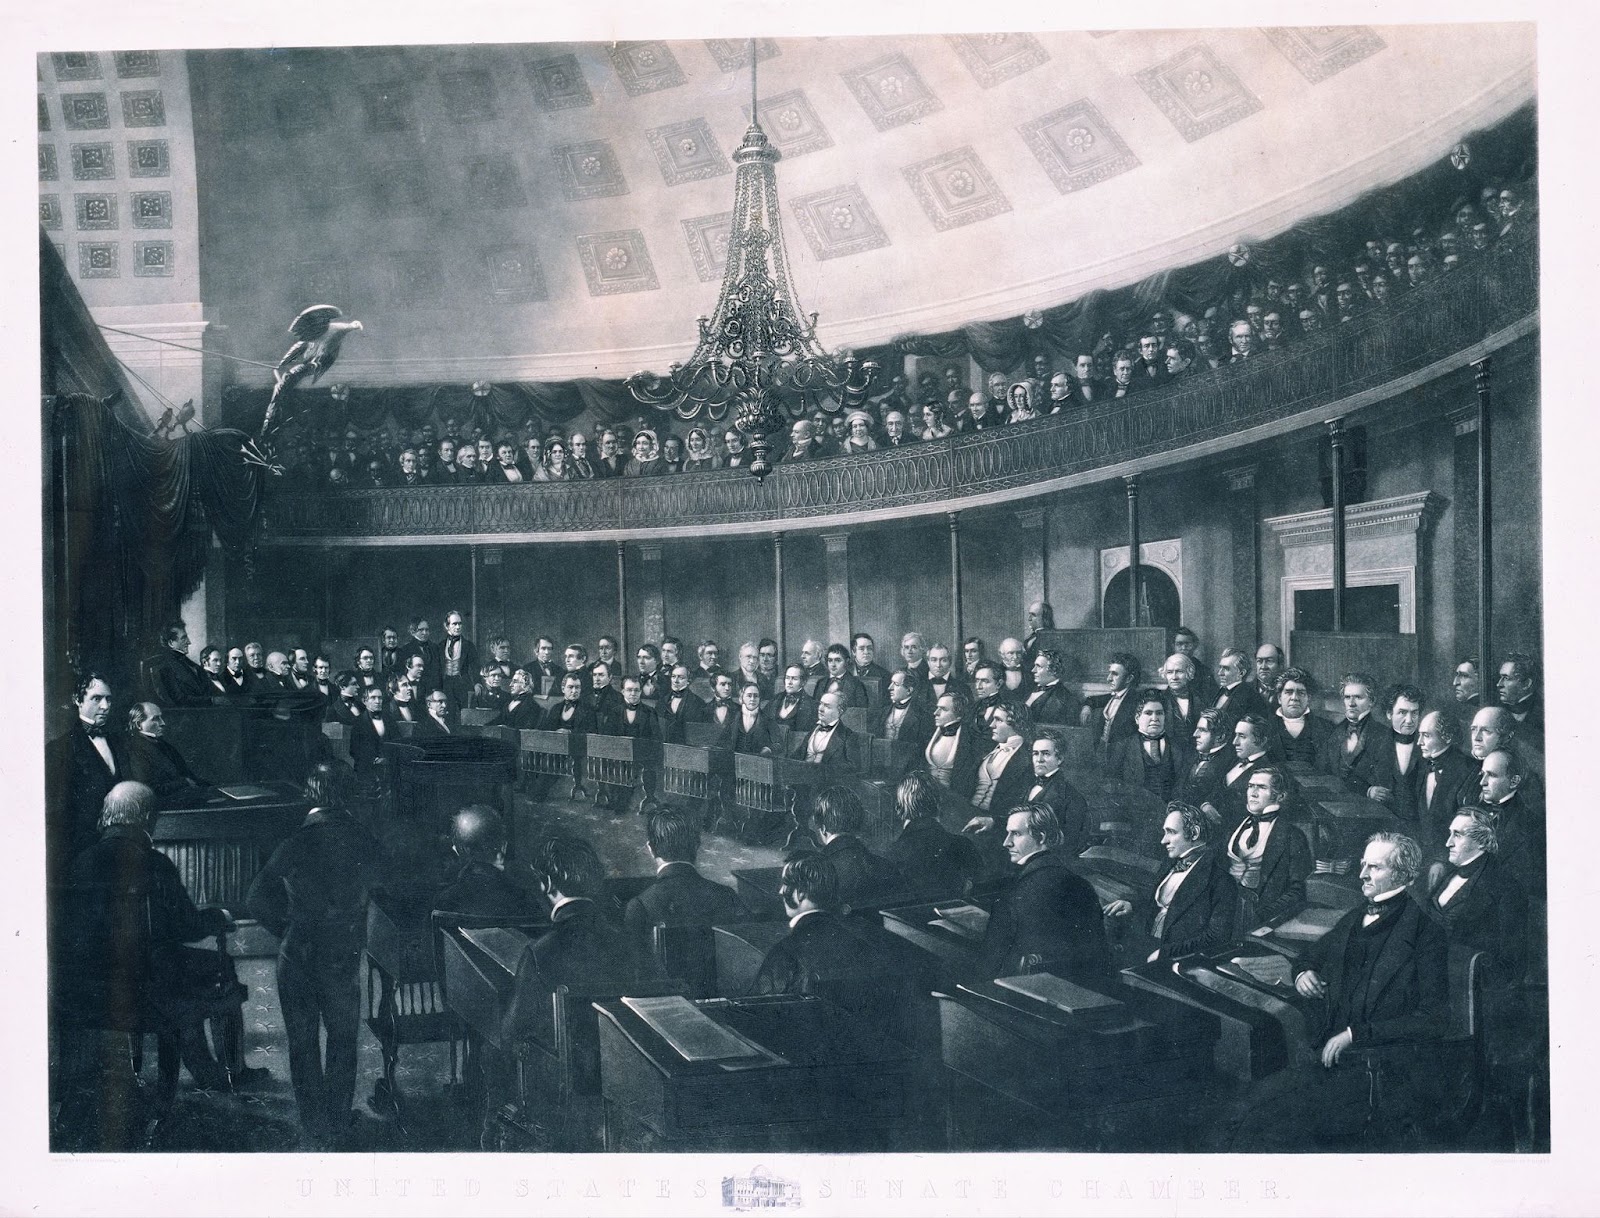 Historic image of the United States Senate Chamber, 1846 (Image courtesy of U.S. Senate Collection)